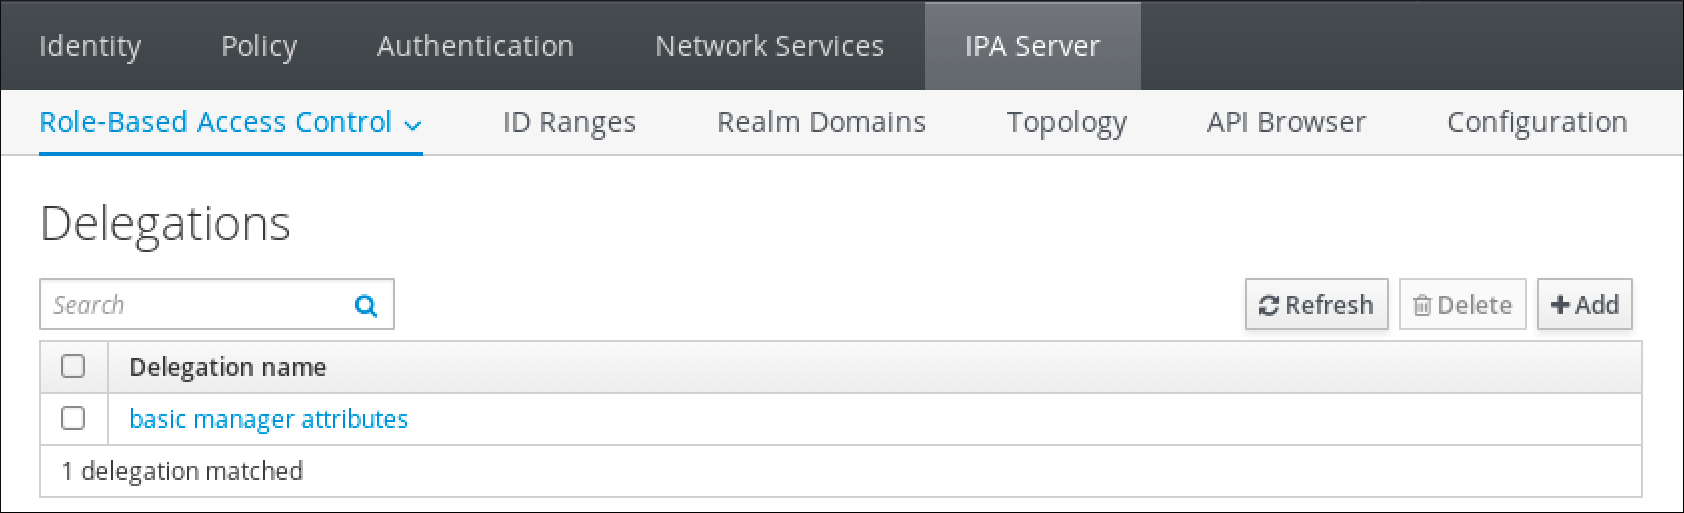 IPA 서버 탭에서 역할 기반 액세스 제어 하위 페이지를 표시하는 IdM 웹 UI의 스크린샷입니다. 위임 페이지에는 "basic manager attributes" 위임 이름에 대한 항목이 있는 테이블이 표시됩니다.